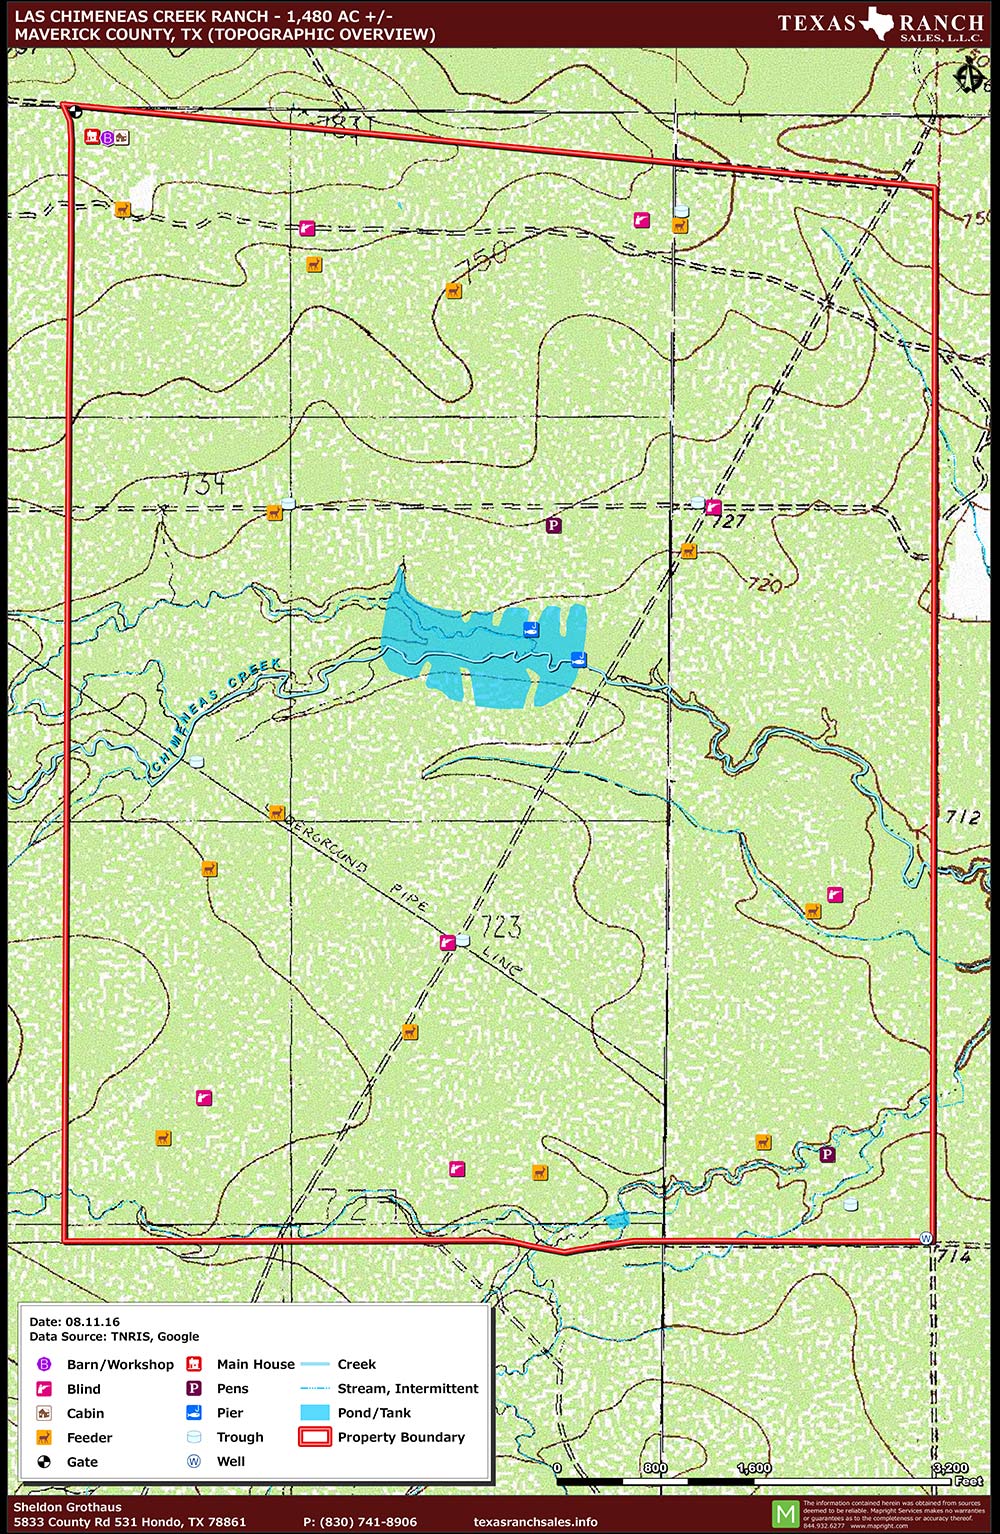 1442 Acre Ranch Maverick Topography Map